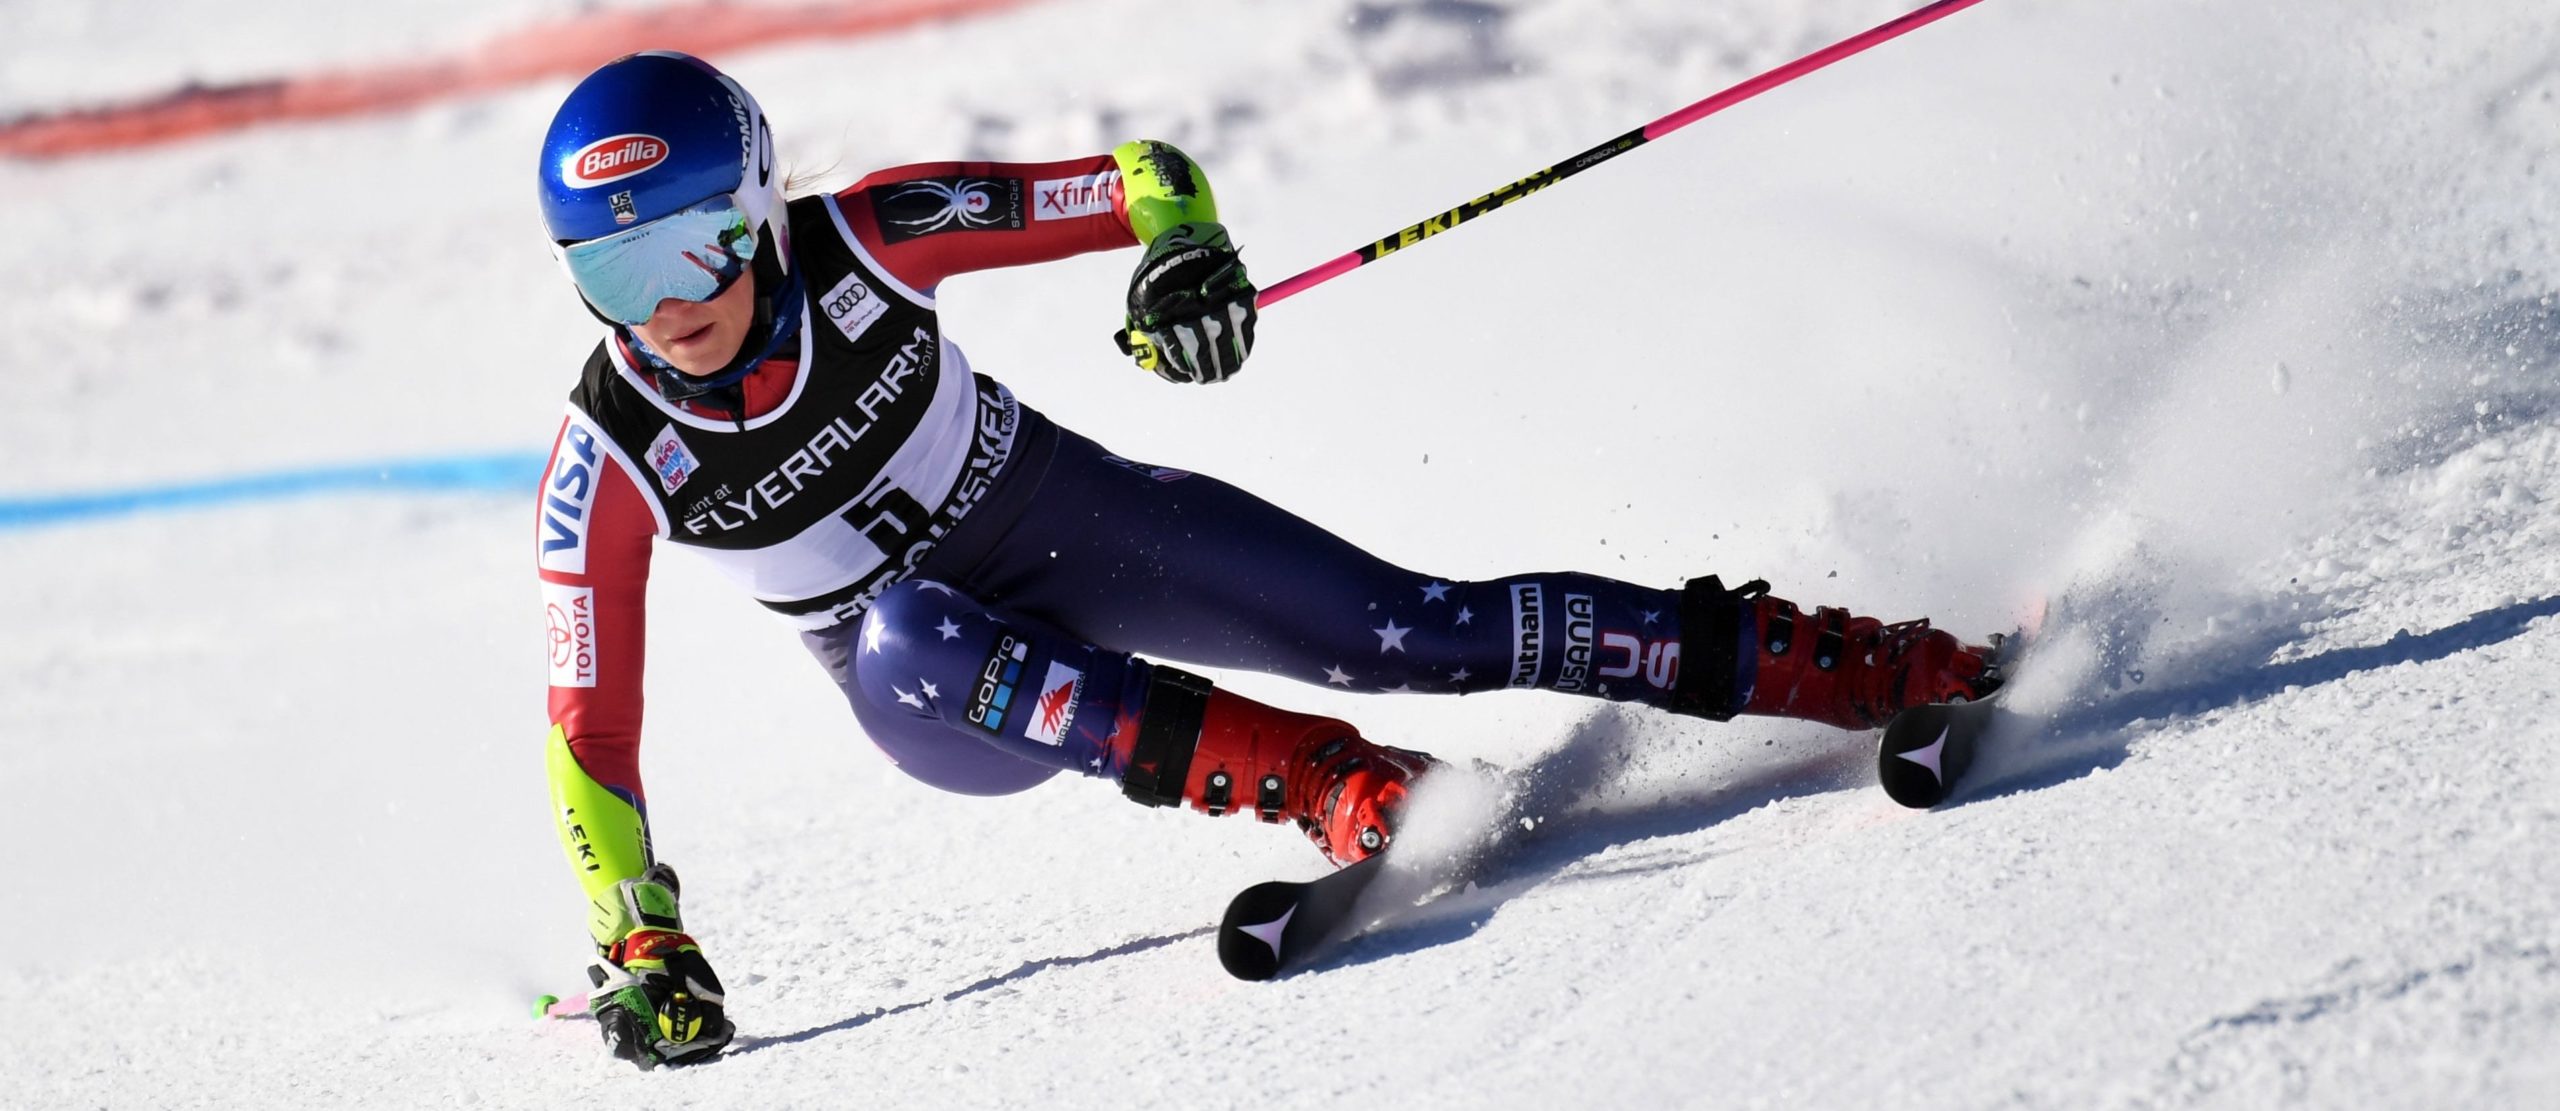 Coupe du Monde ski alpin dames Courchevel